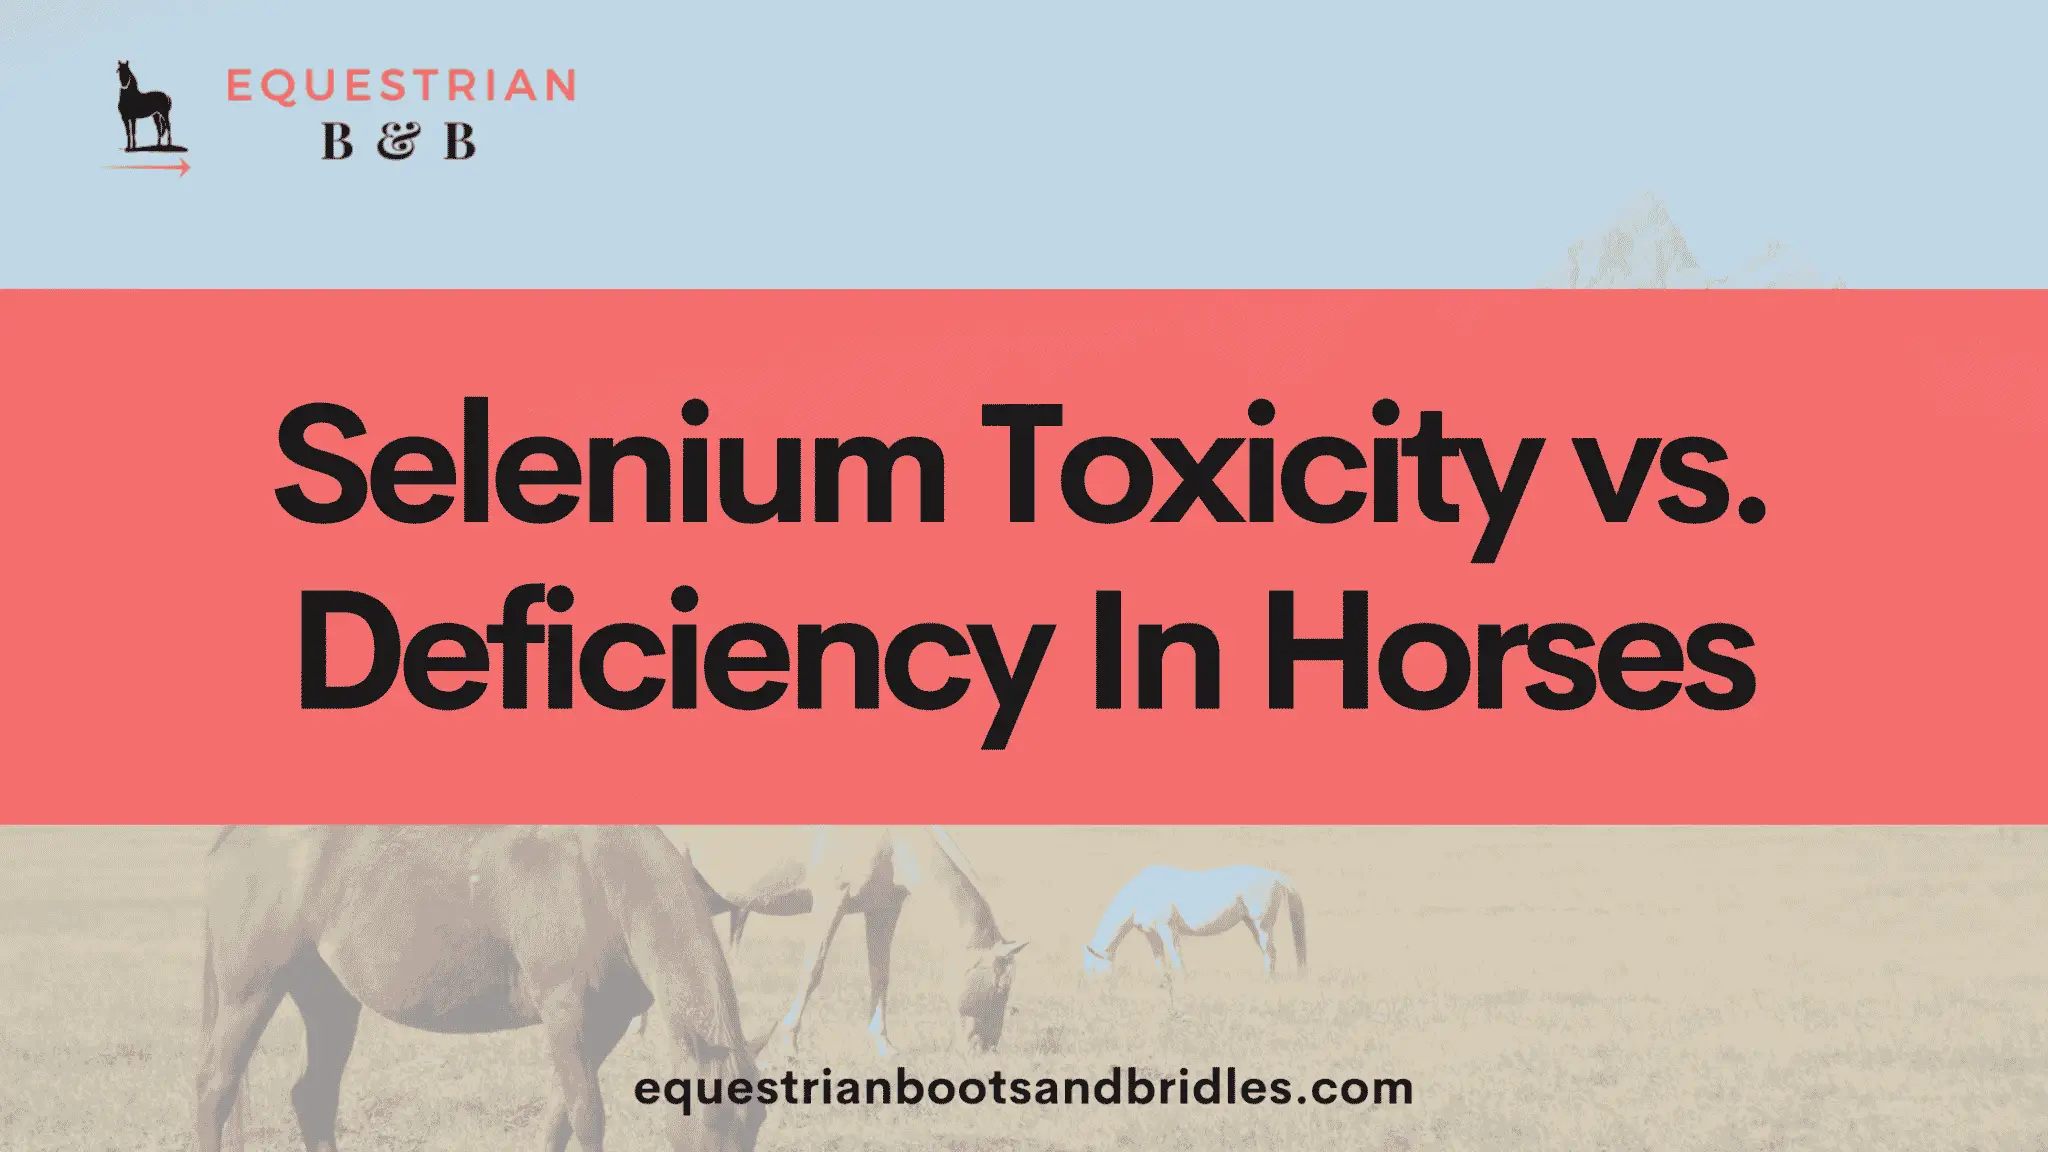 Selenium Toxicity vs. Deficiency In Horses on equestrianbootsandbridles.com